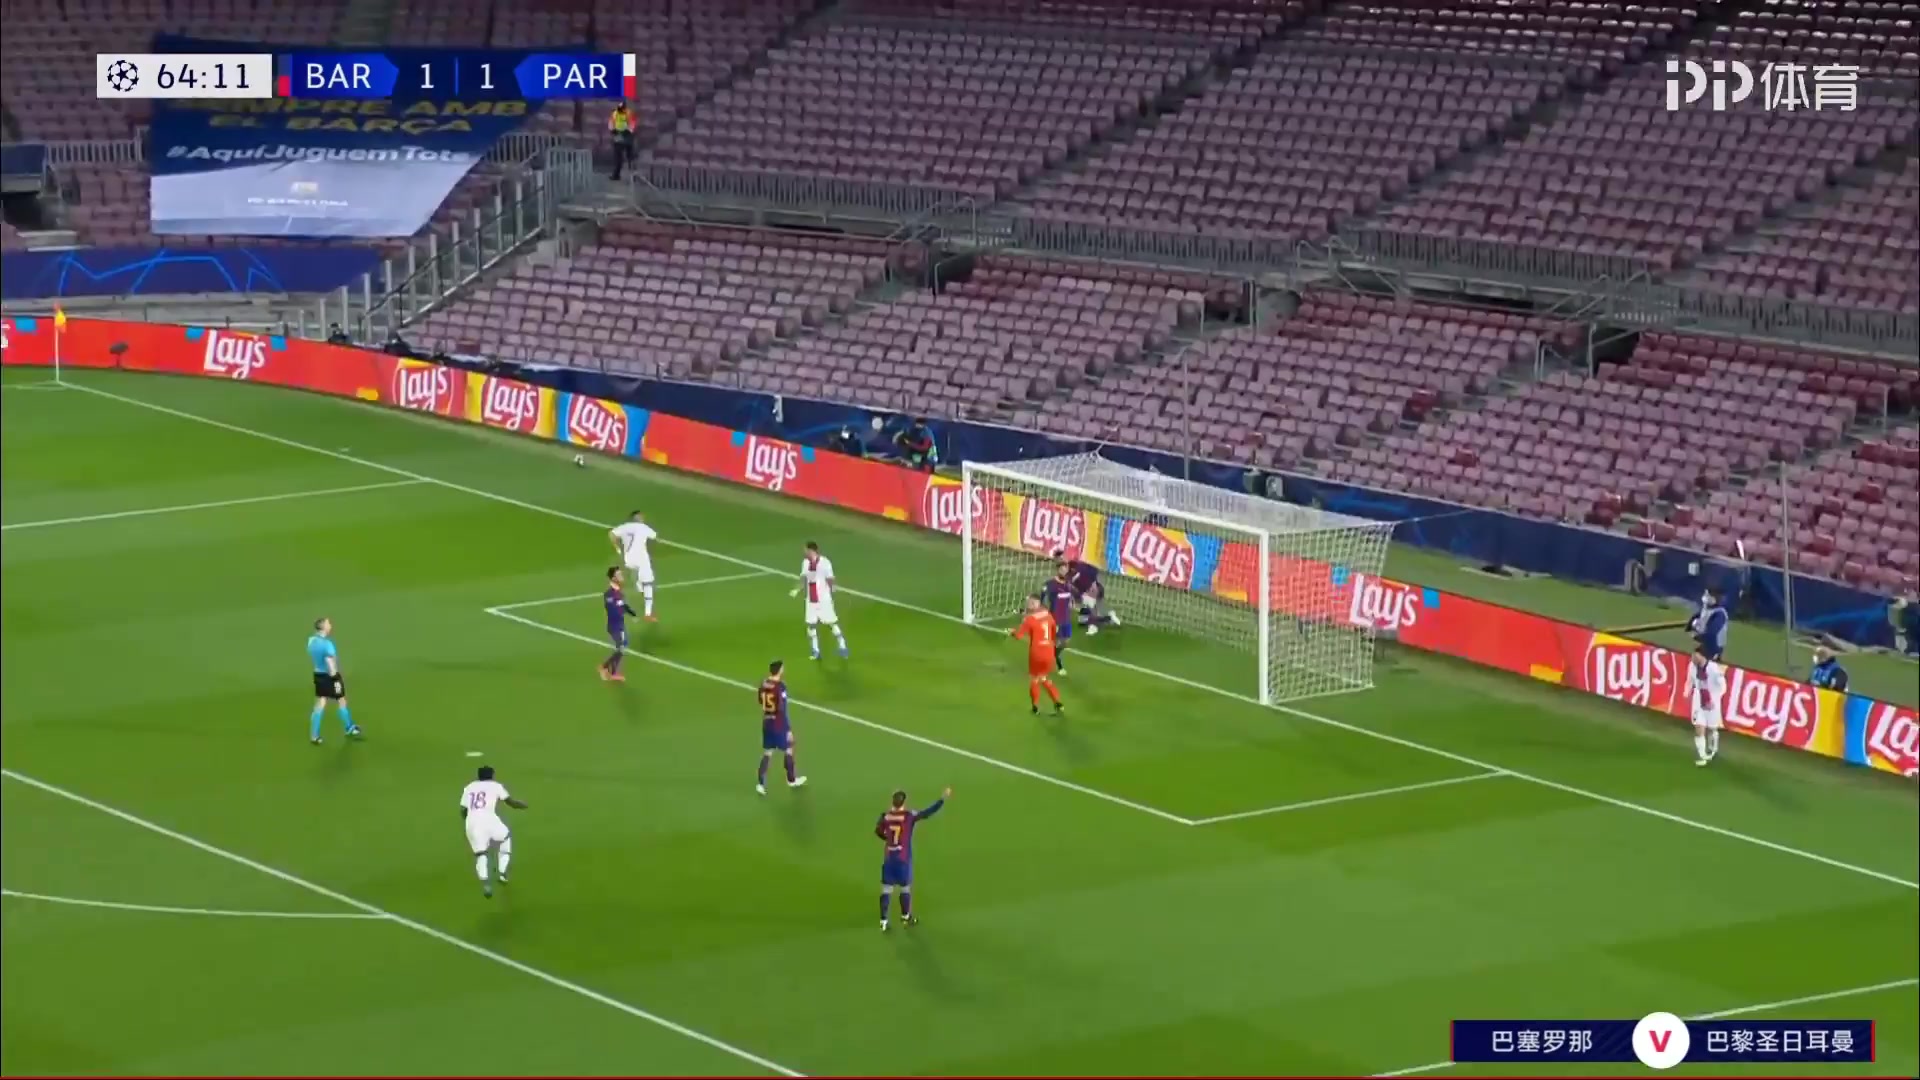 UEFA CL FC Barcelona Vs Paris Saint Germain (PSG) Kylian Mbappe Lottin Goal in 65 min, Score 1:2